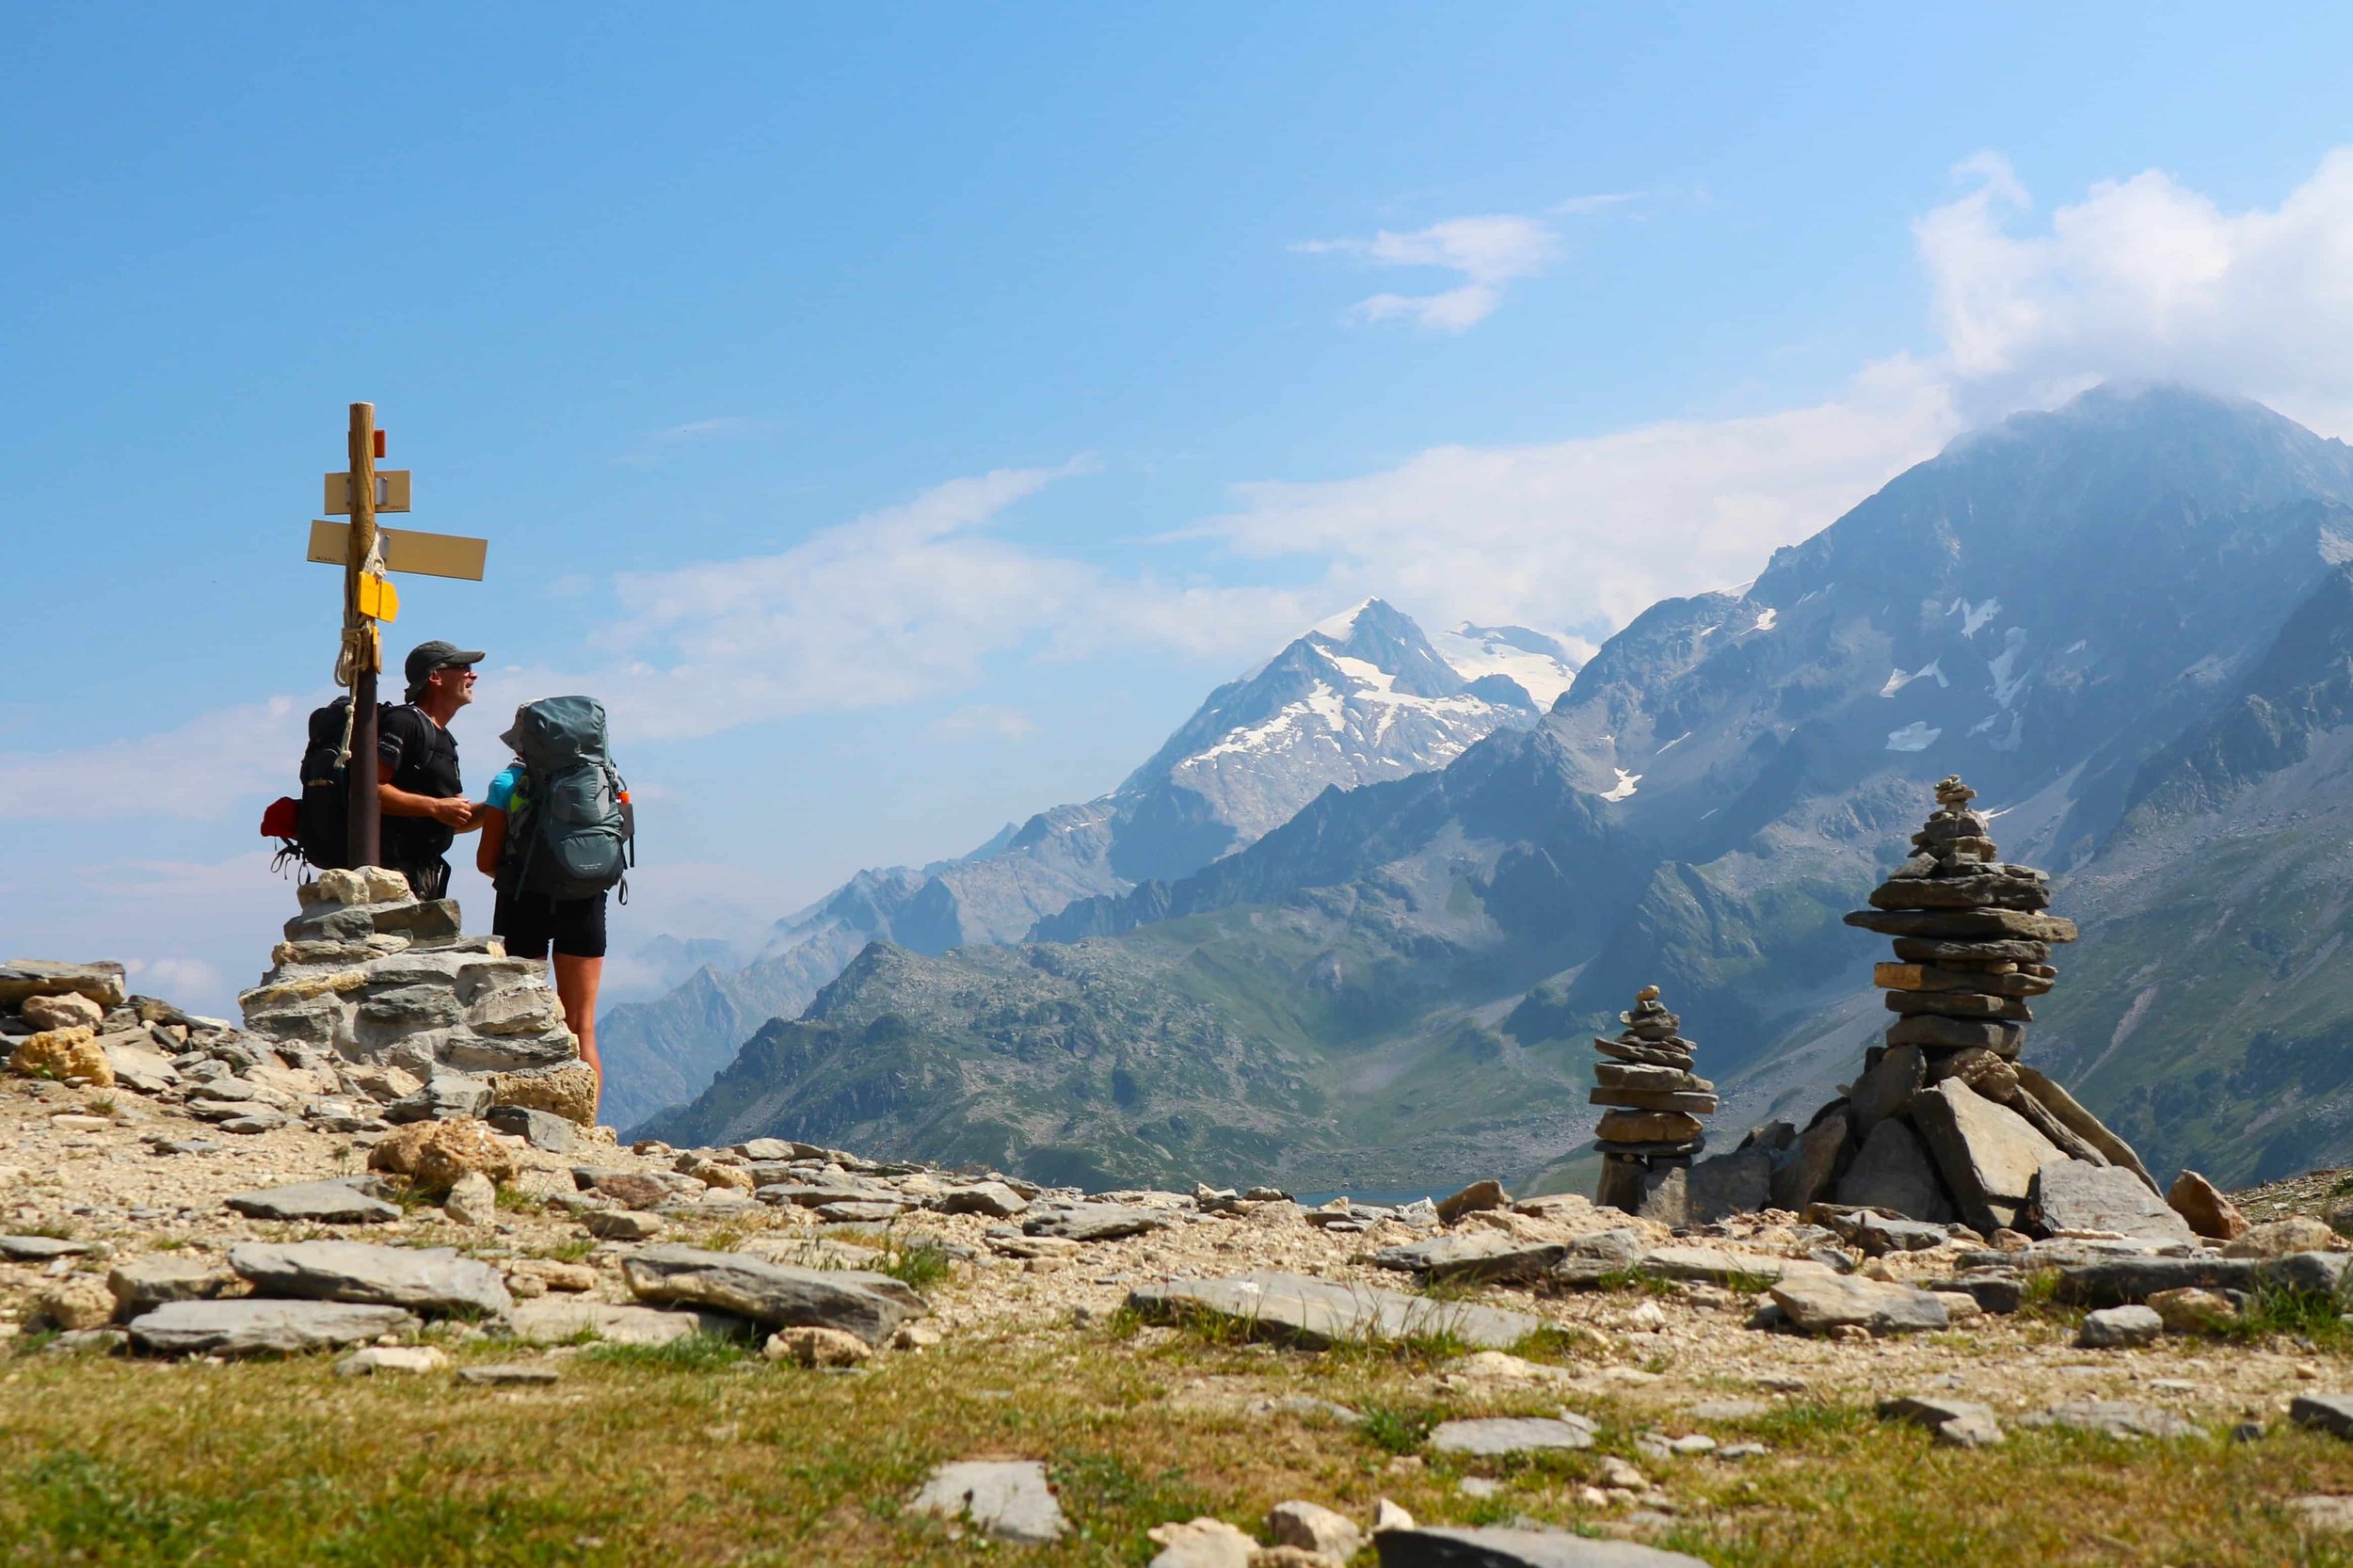 Hiking the Tour du Mt Blanc